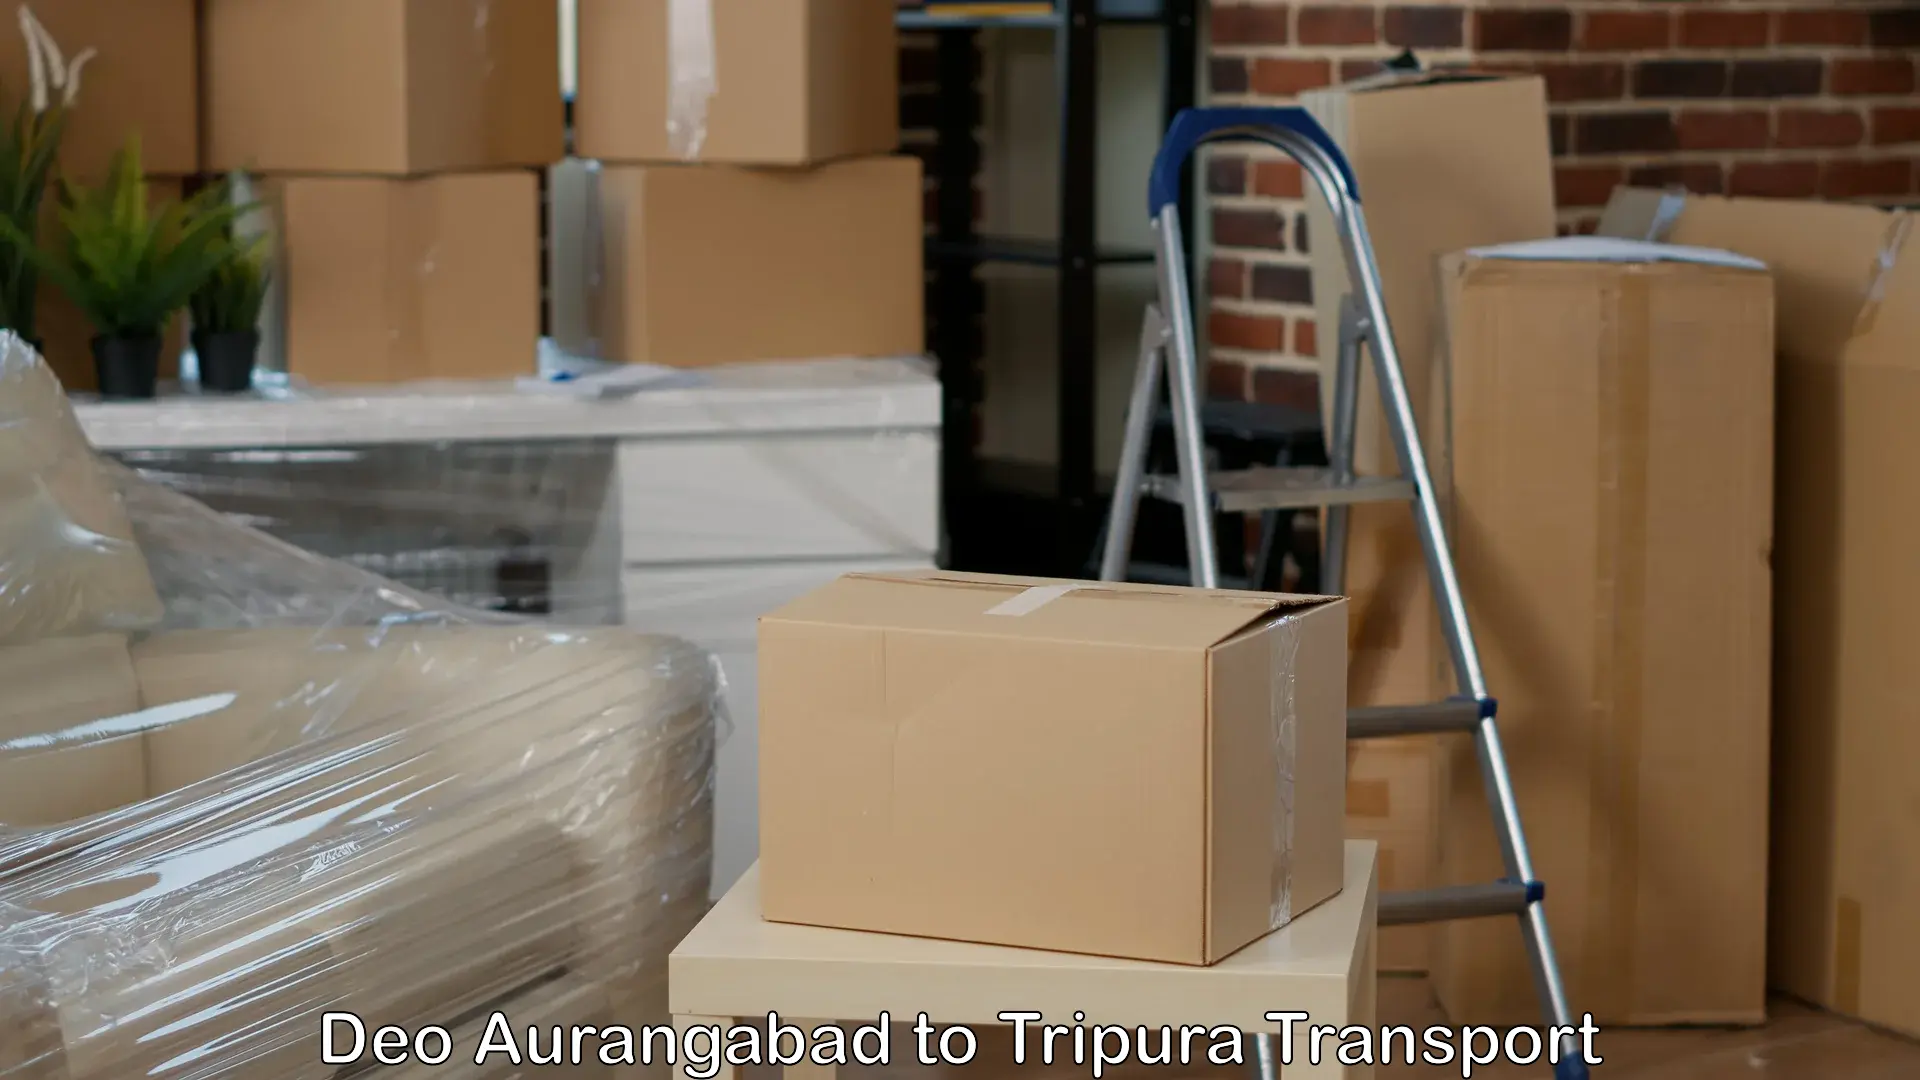 Goods delivery service Deo Aurangabad to West Tripura